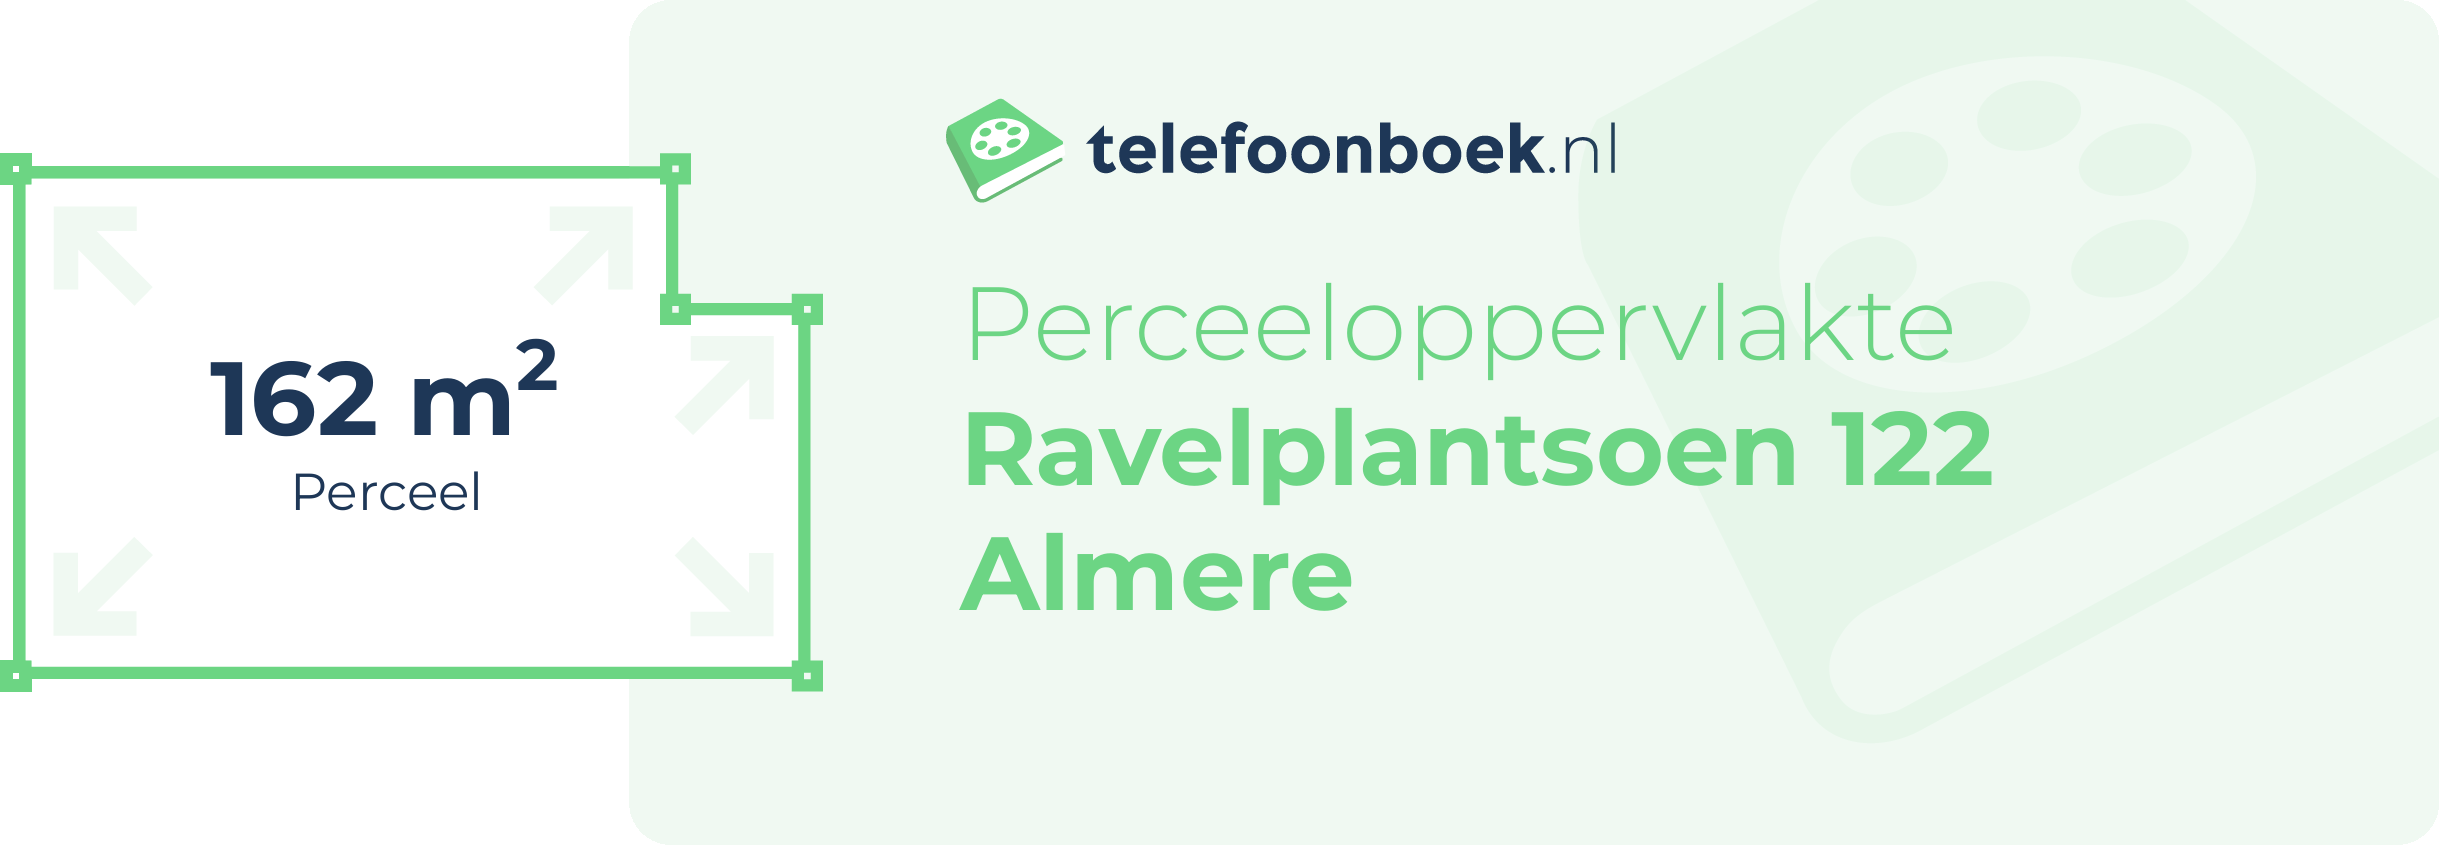 Perceeloppervlakte Ravelplantsoen 122 Almere